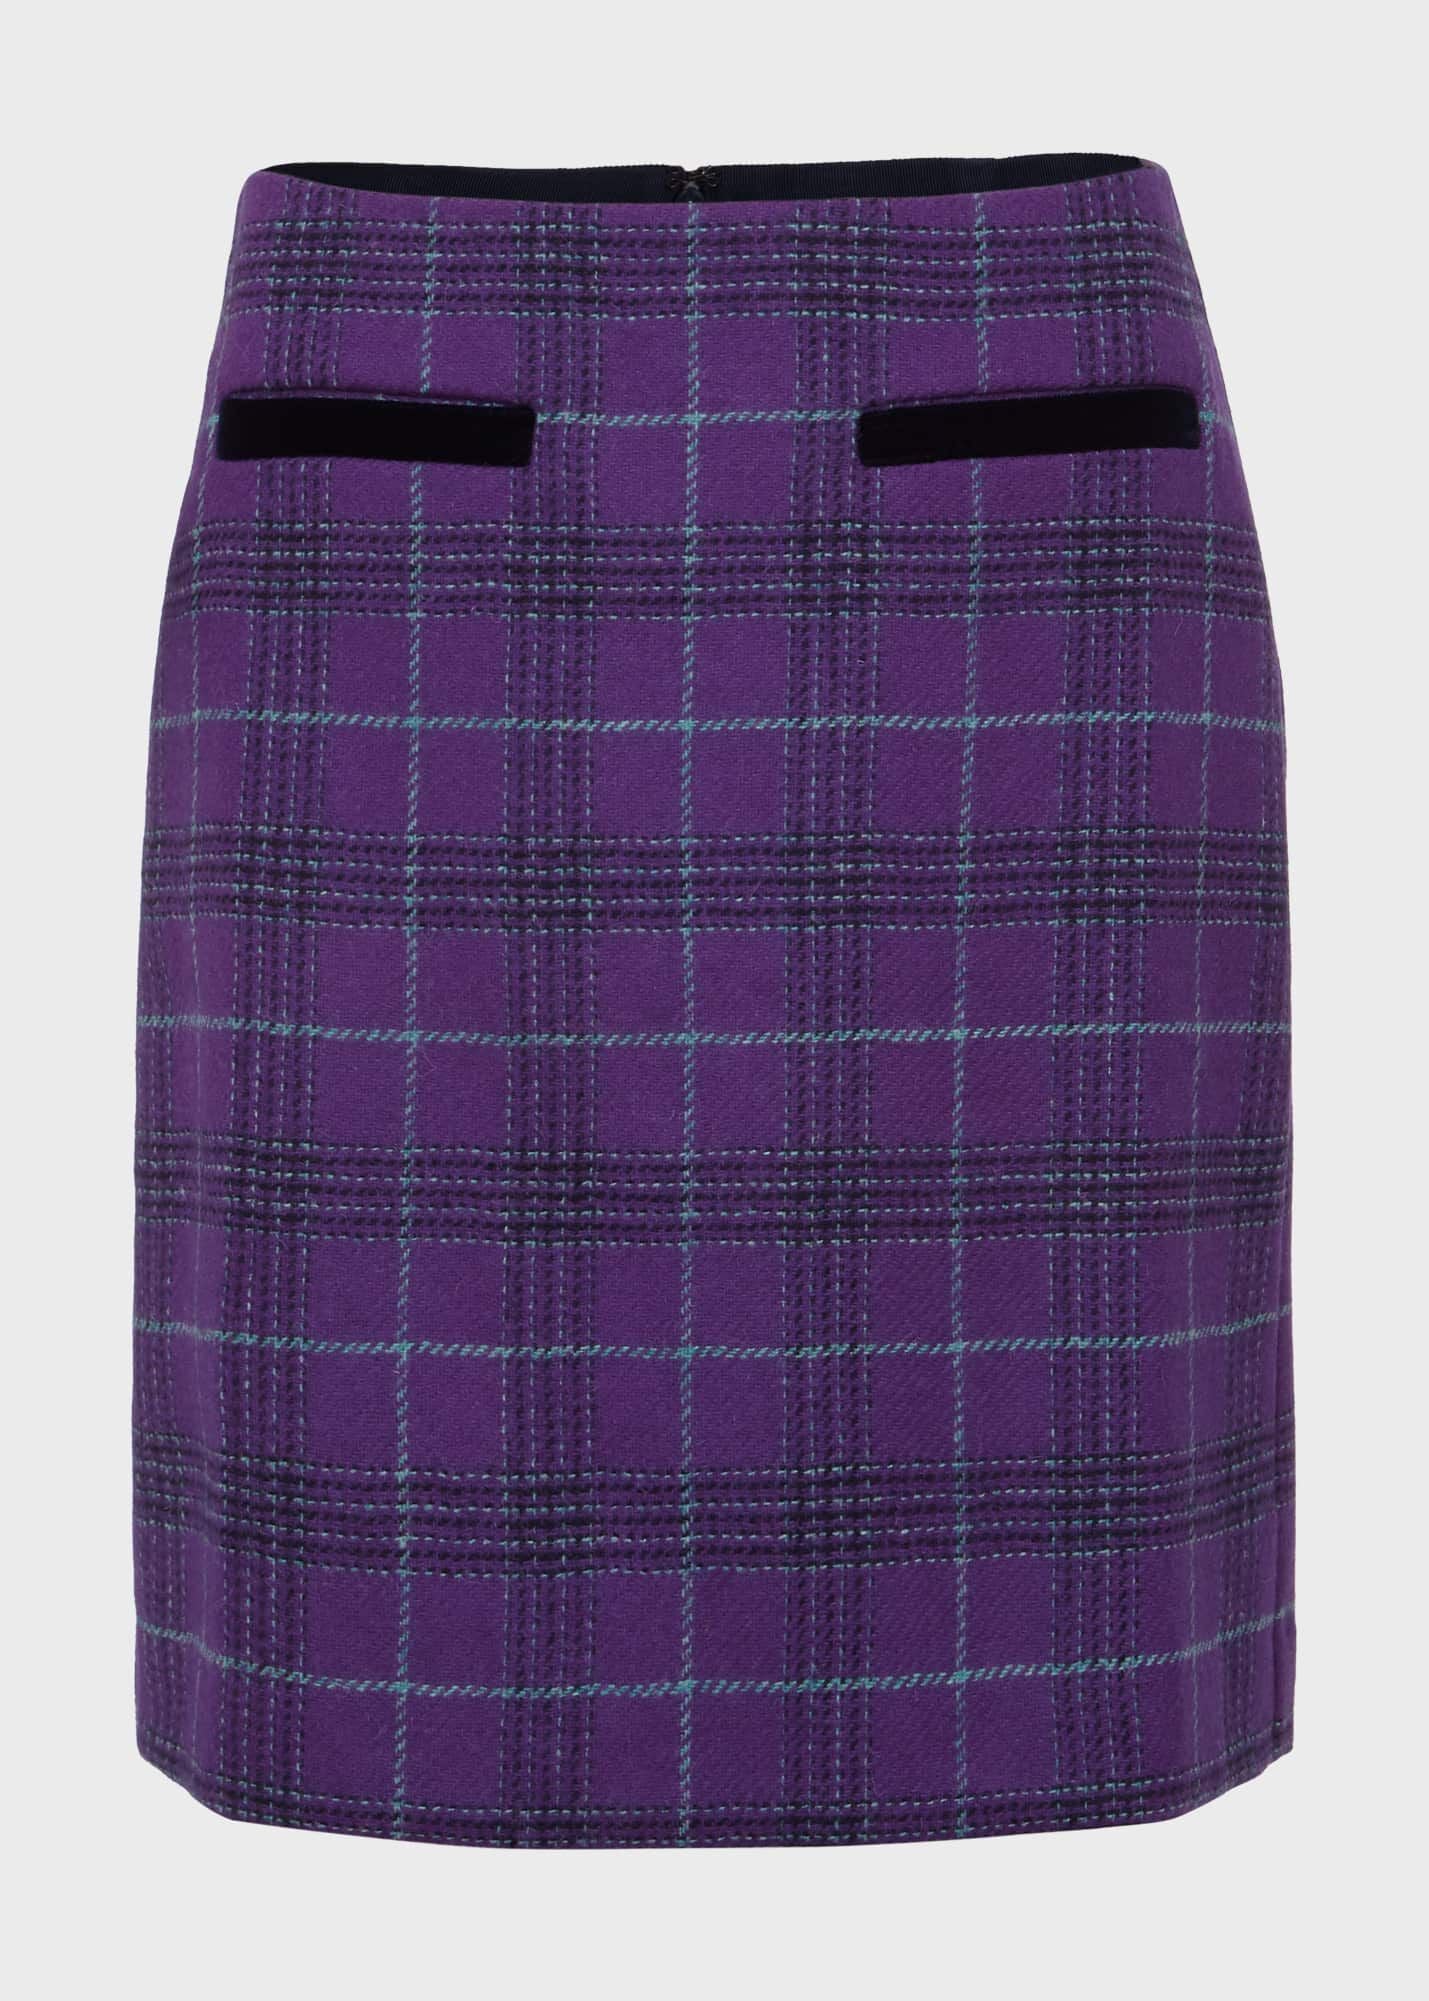 Ruthie Skirt 0223/7234/1049l00 Purple-Multi